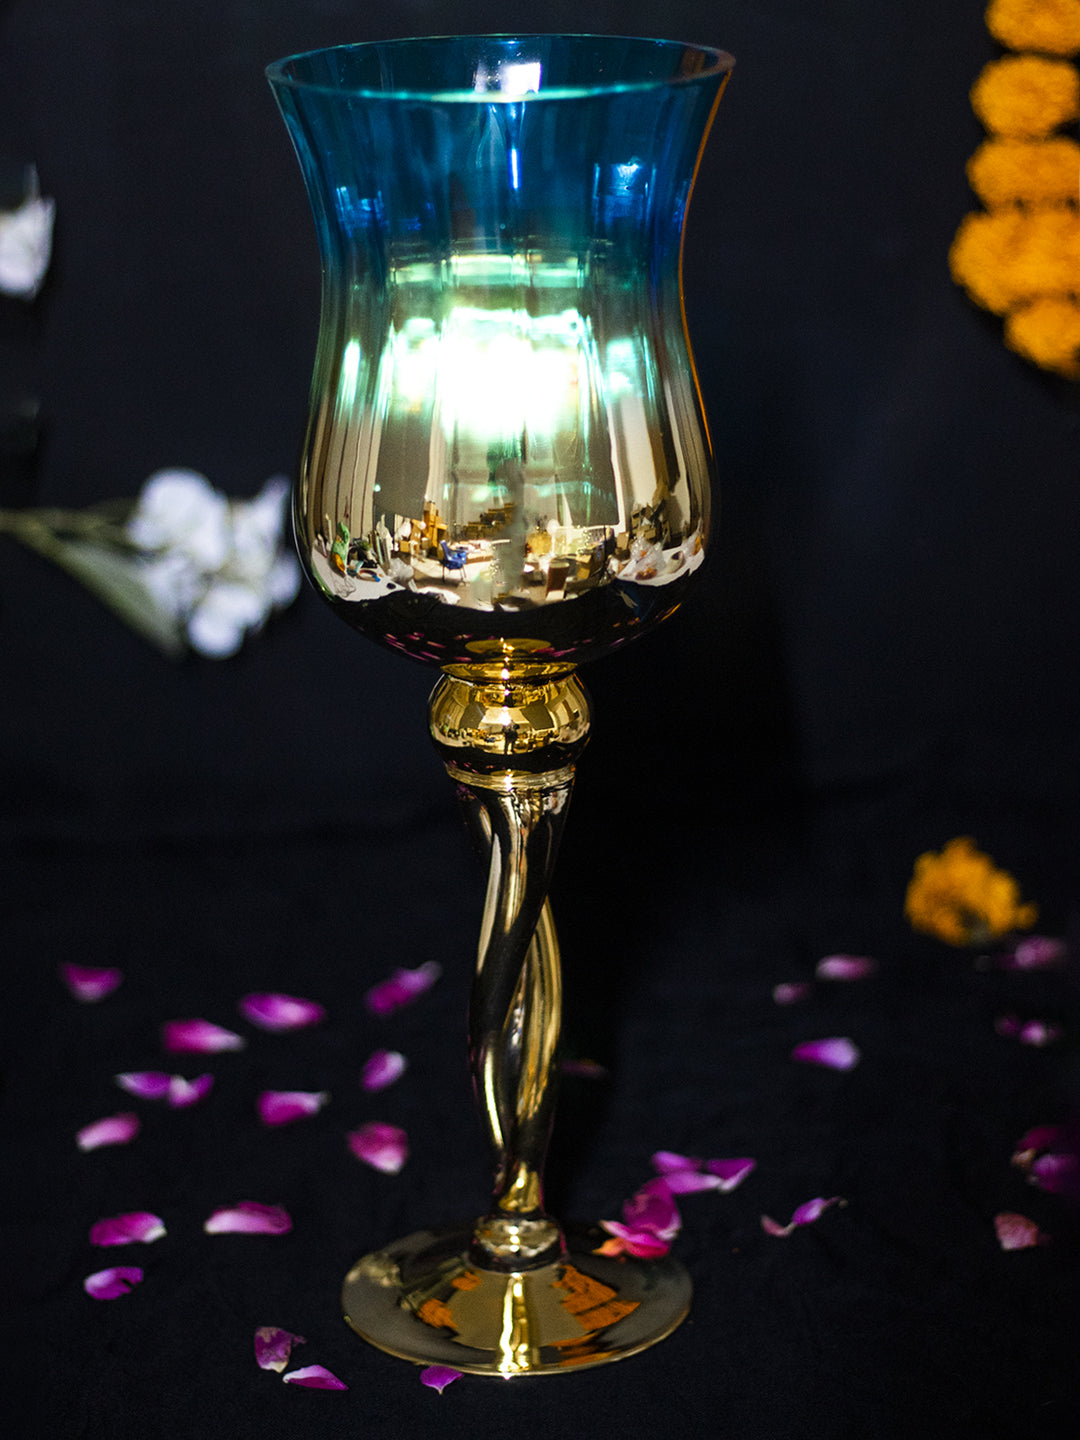 VON CASA Decorative Skyblue Tined Glass Tealight Candlestick Holder